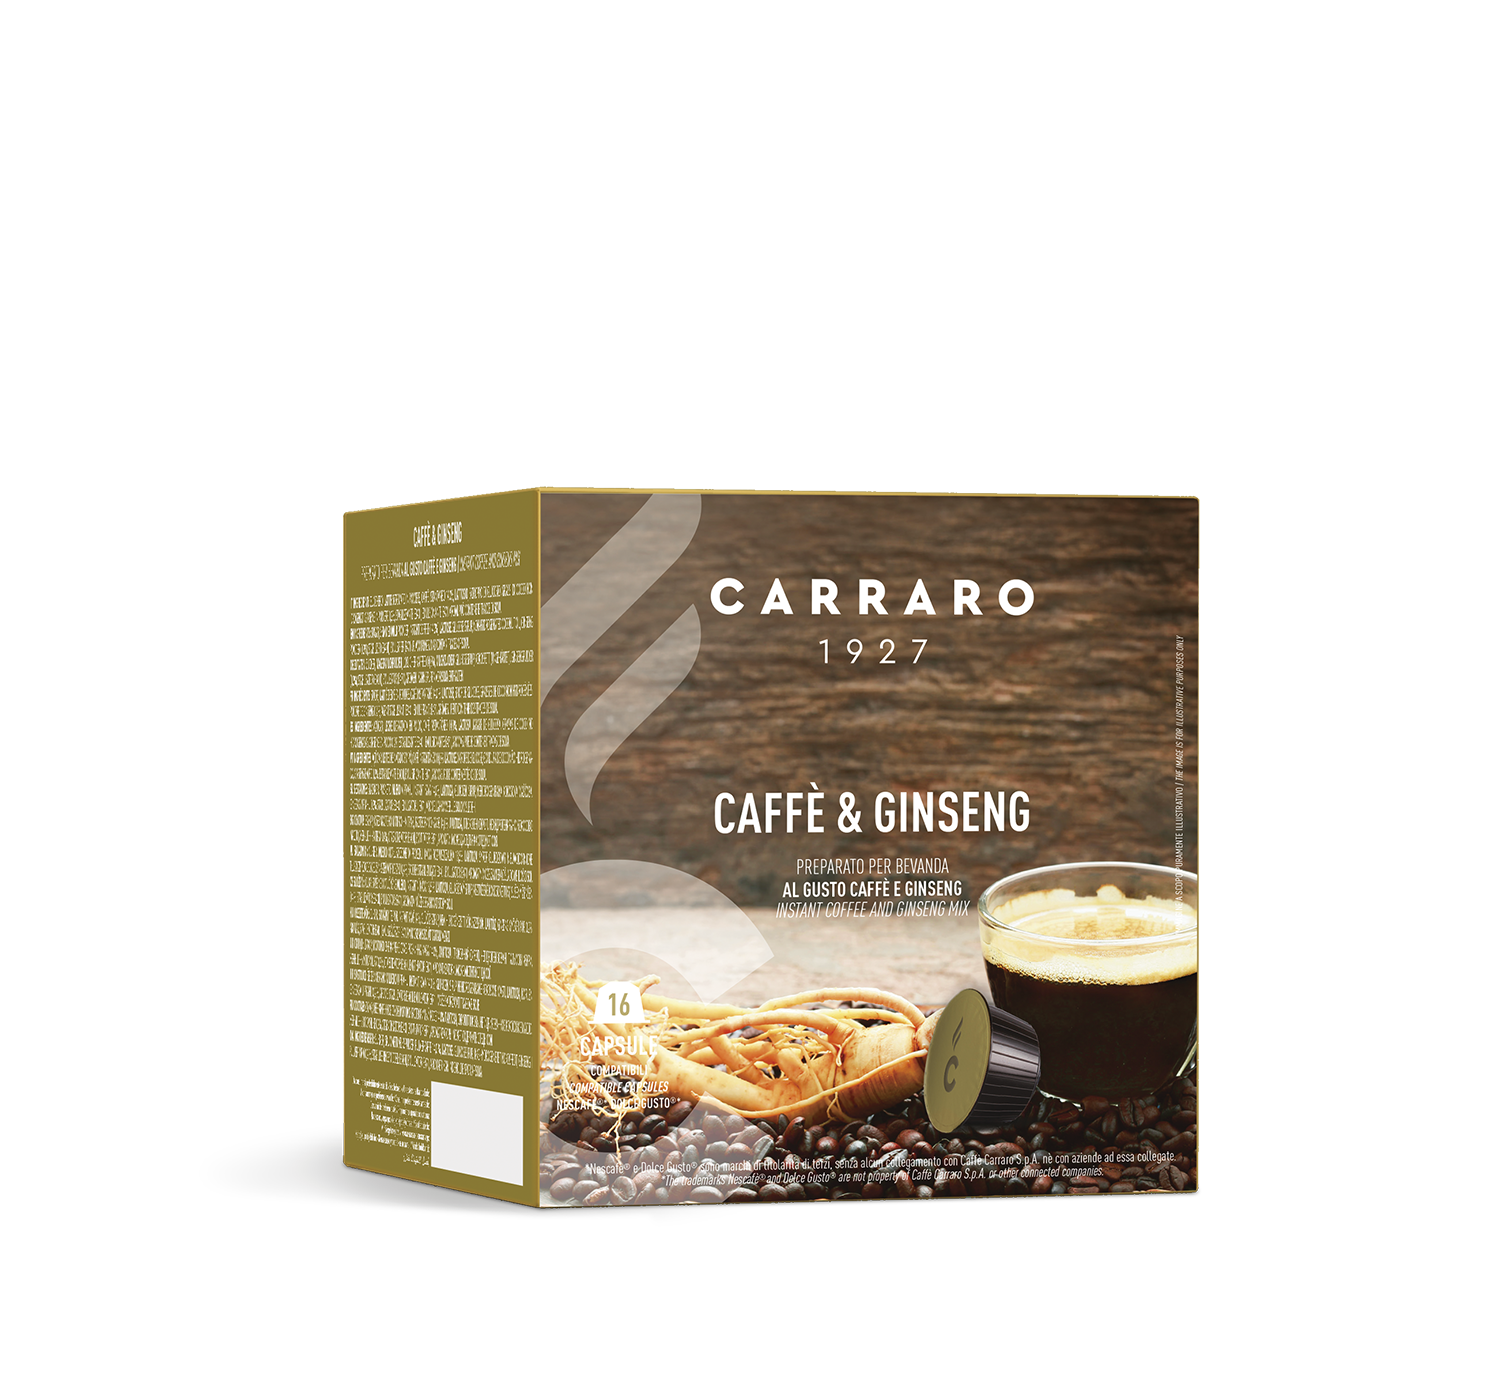 Casa - Caffè&Ginseng  – 16 capsule compatibili Dolce Gusto®* - Shop online Caffè Carraro